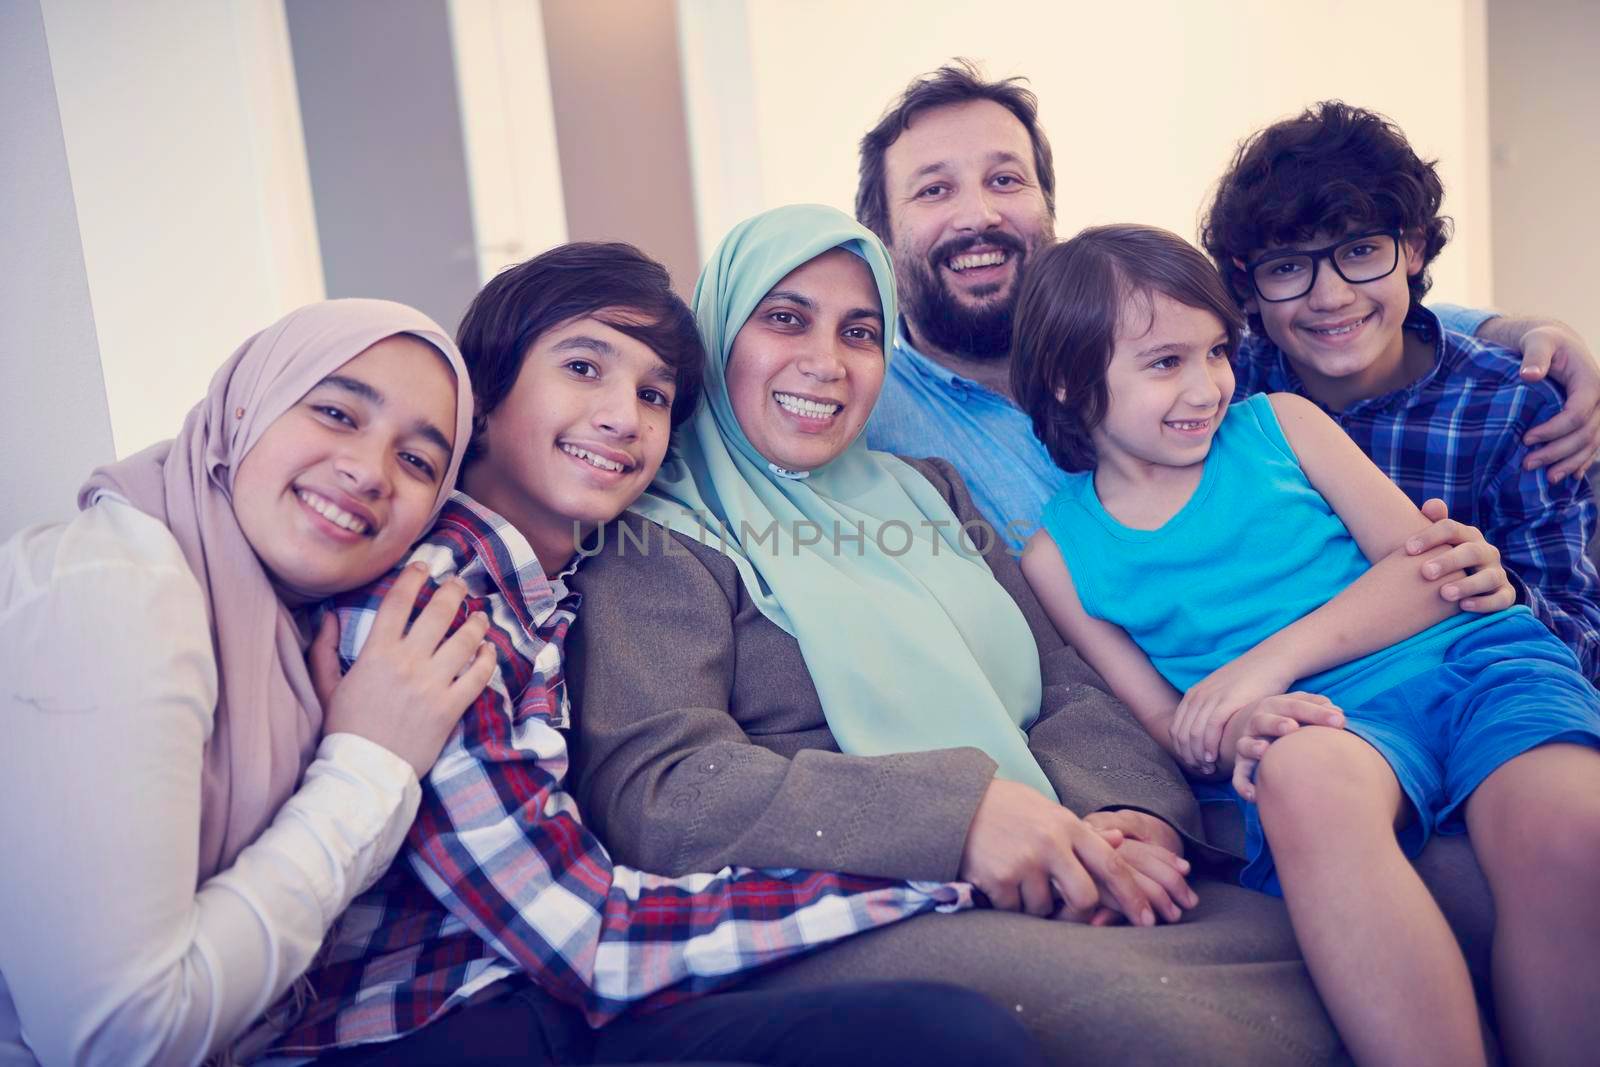 muslim family portrait with arab  teenage kids at modern home interior